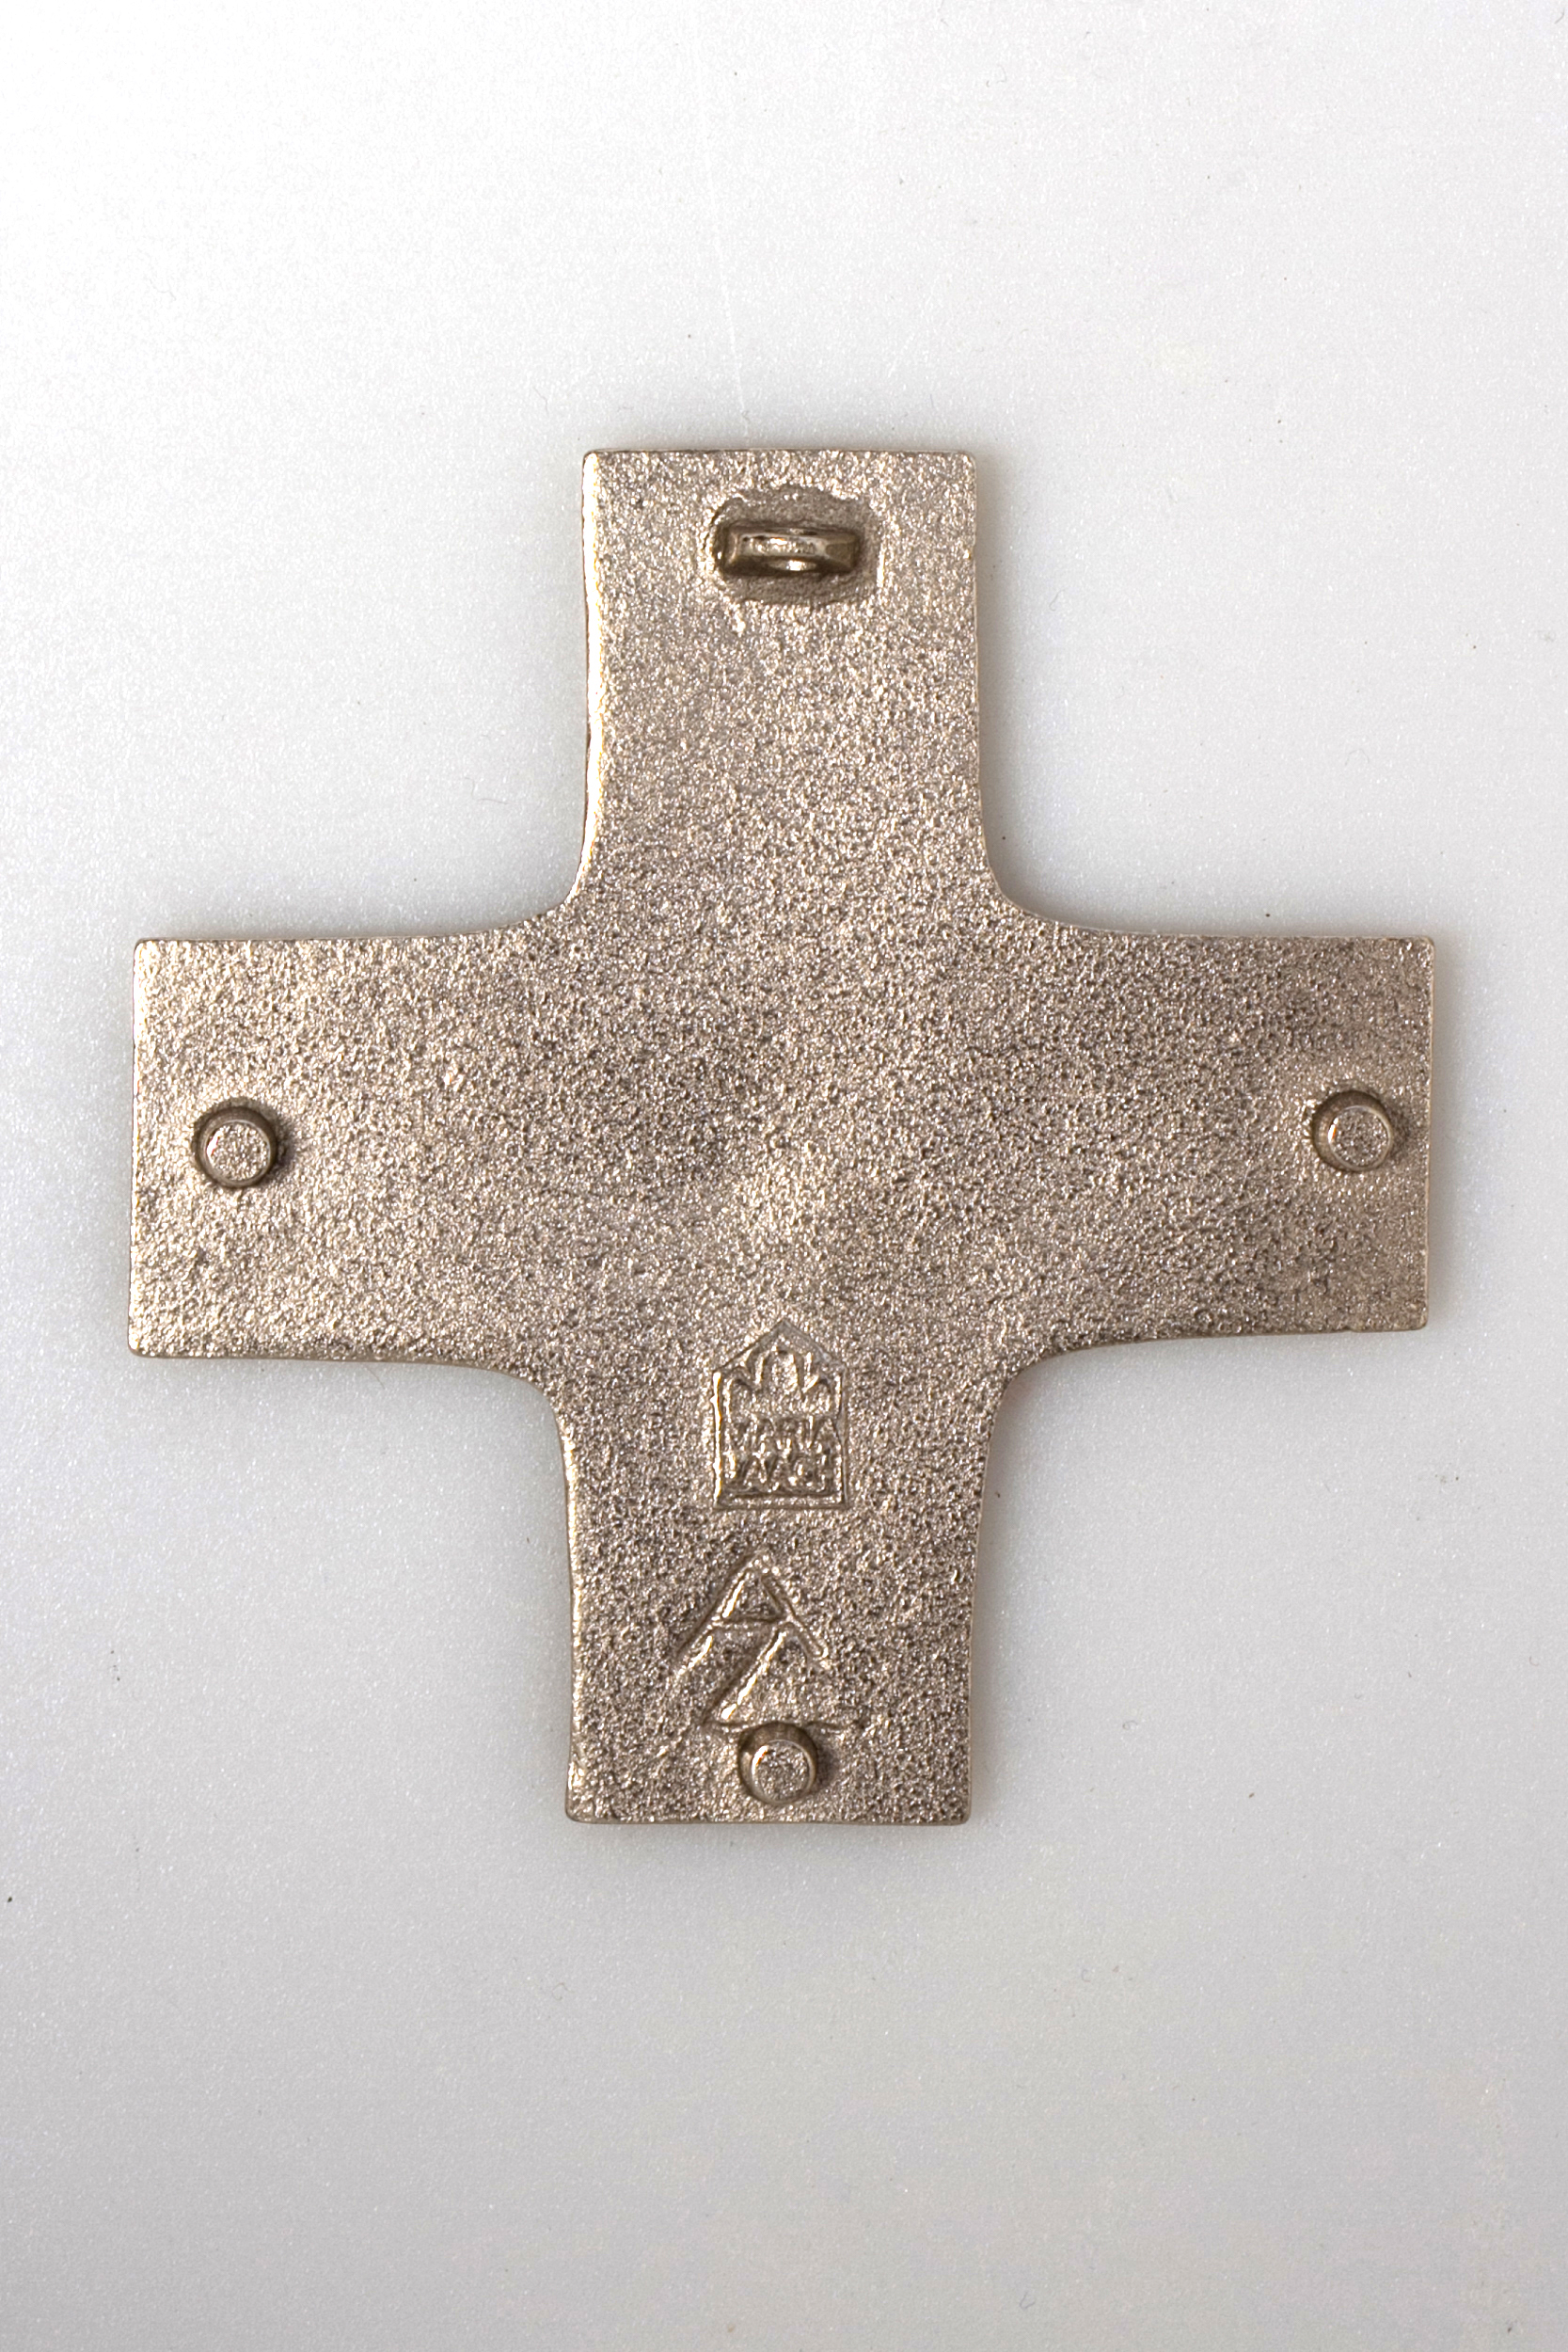 Symbolkreuz - Friedenstaube & Neusilber